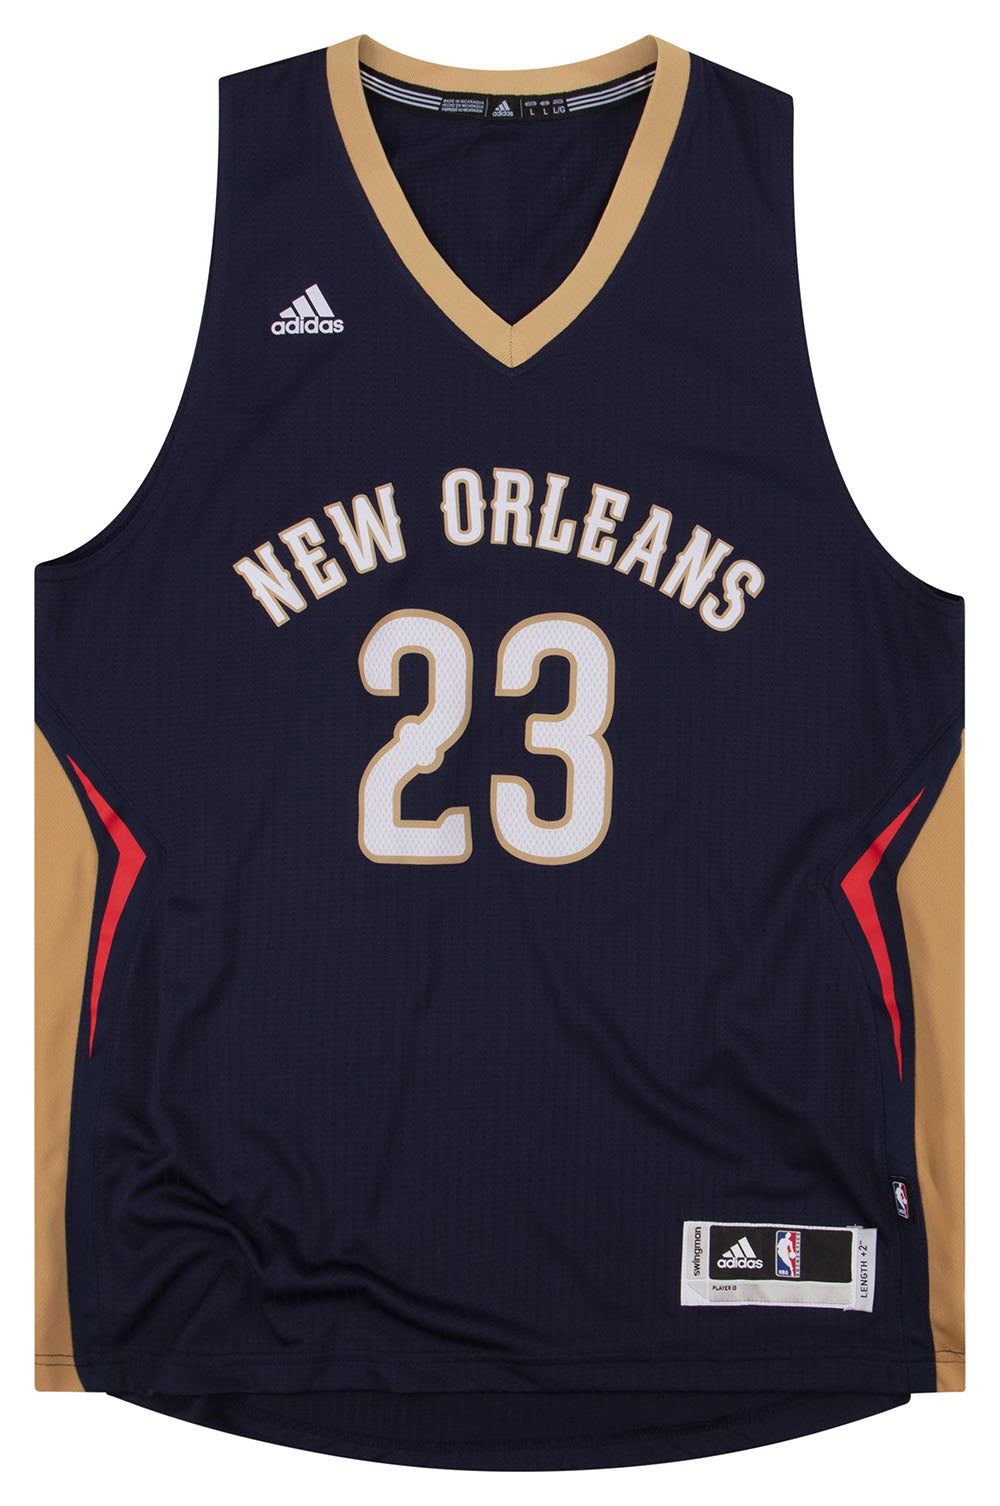 NWT Adidas 2014 NOLA NBA All Star West Anthony Davis #23 Jersey Pelicans NO